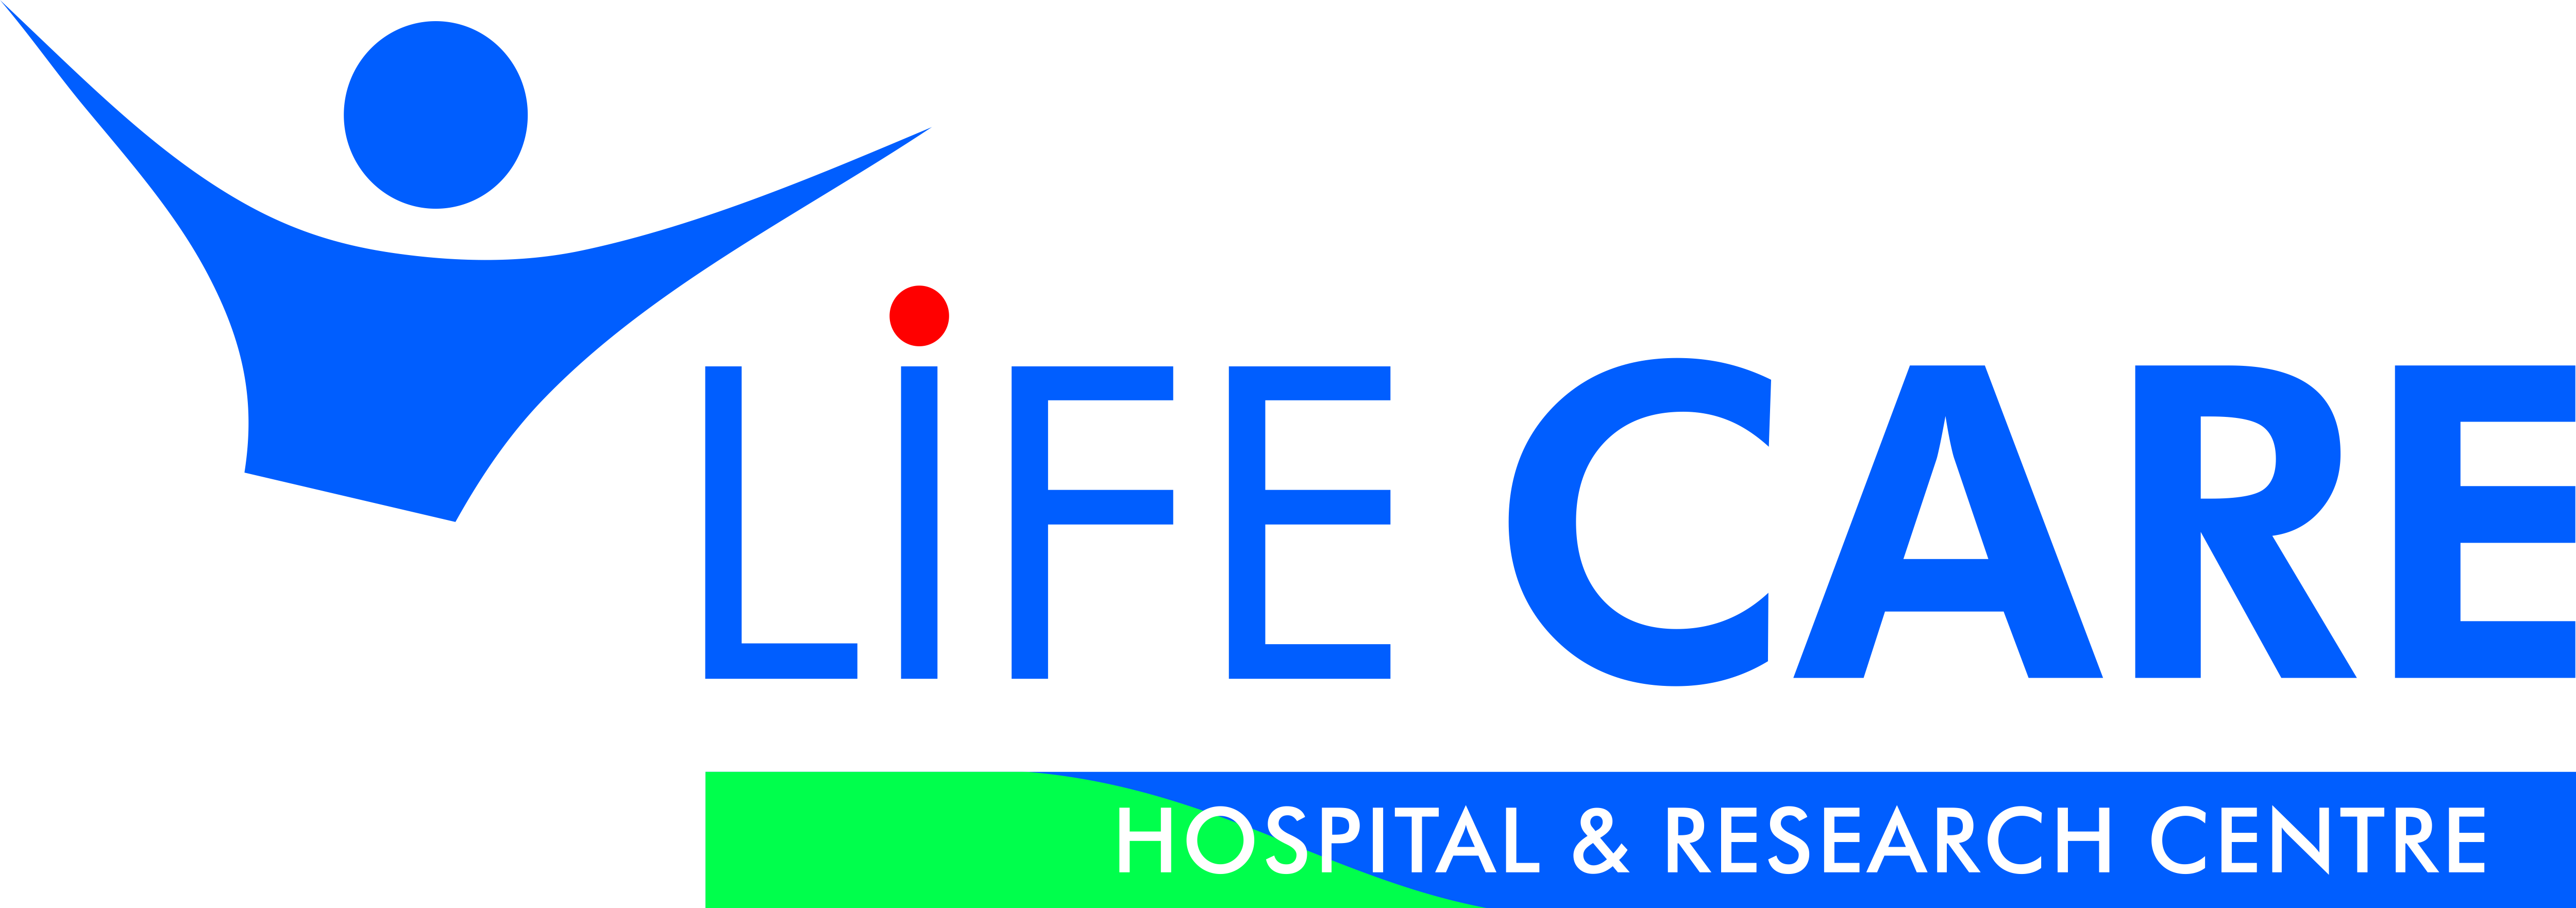 File:Lifecare Logo- 1.43 MB.jpg - Wikimedia Commons